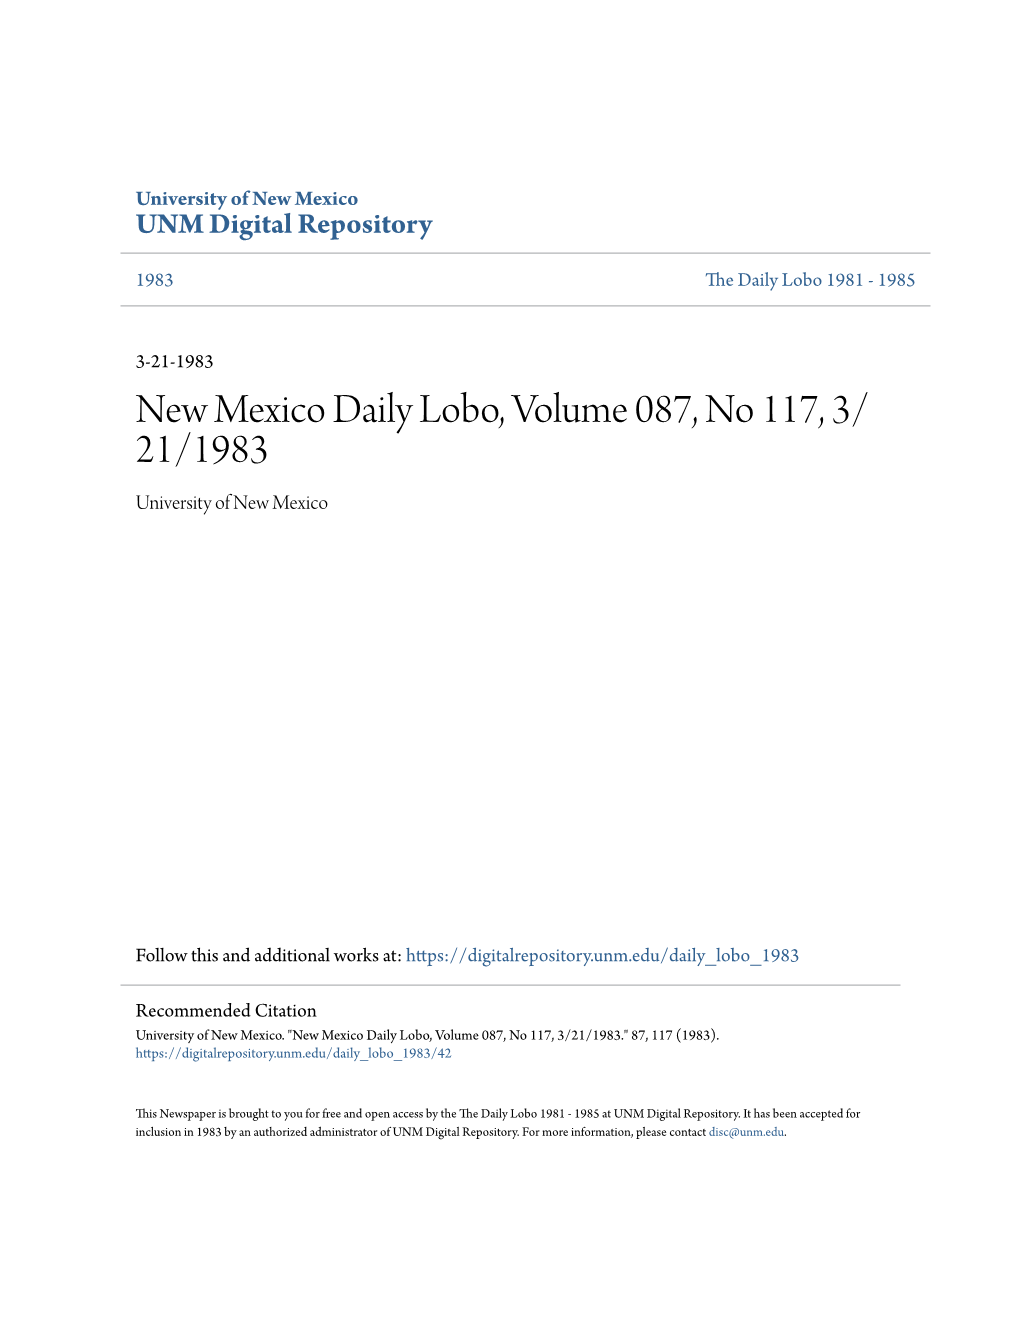 New Mexico Daily Lobo, Volume 087, No 117, 3/21/1983." 87, 117 (1983)